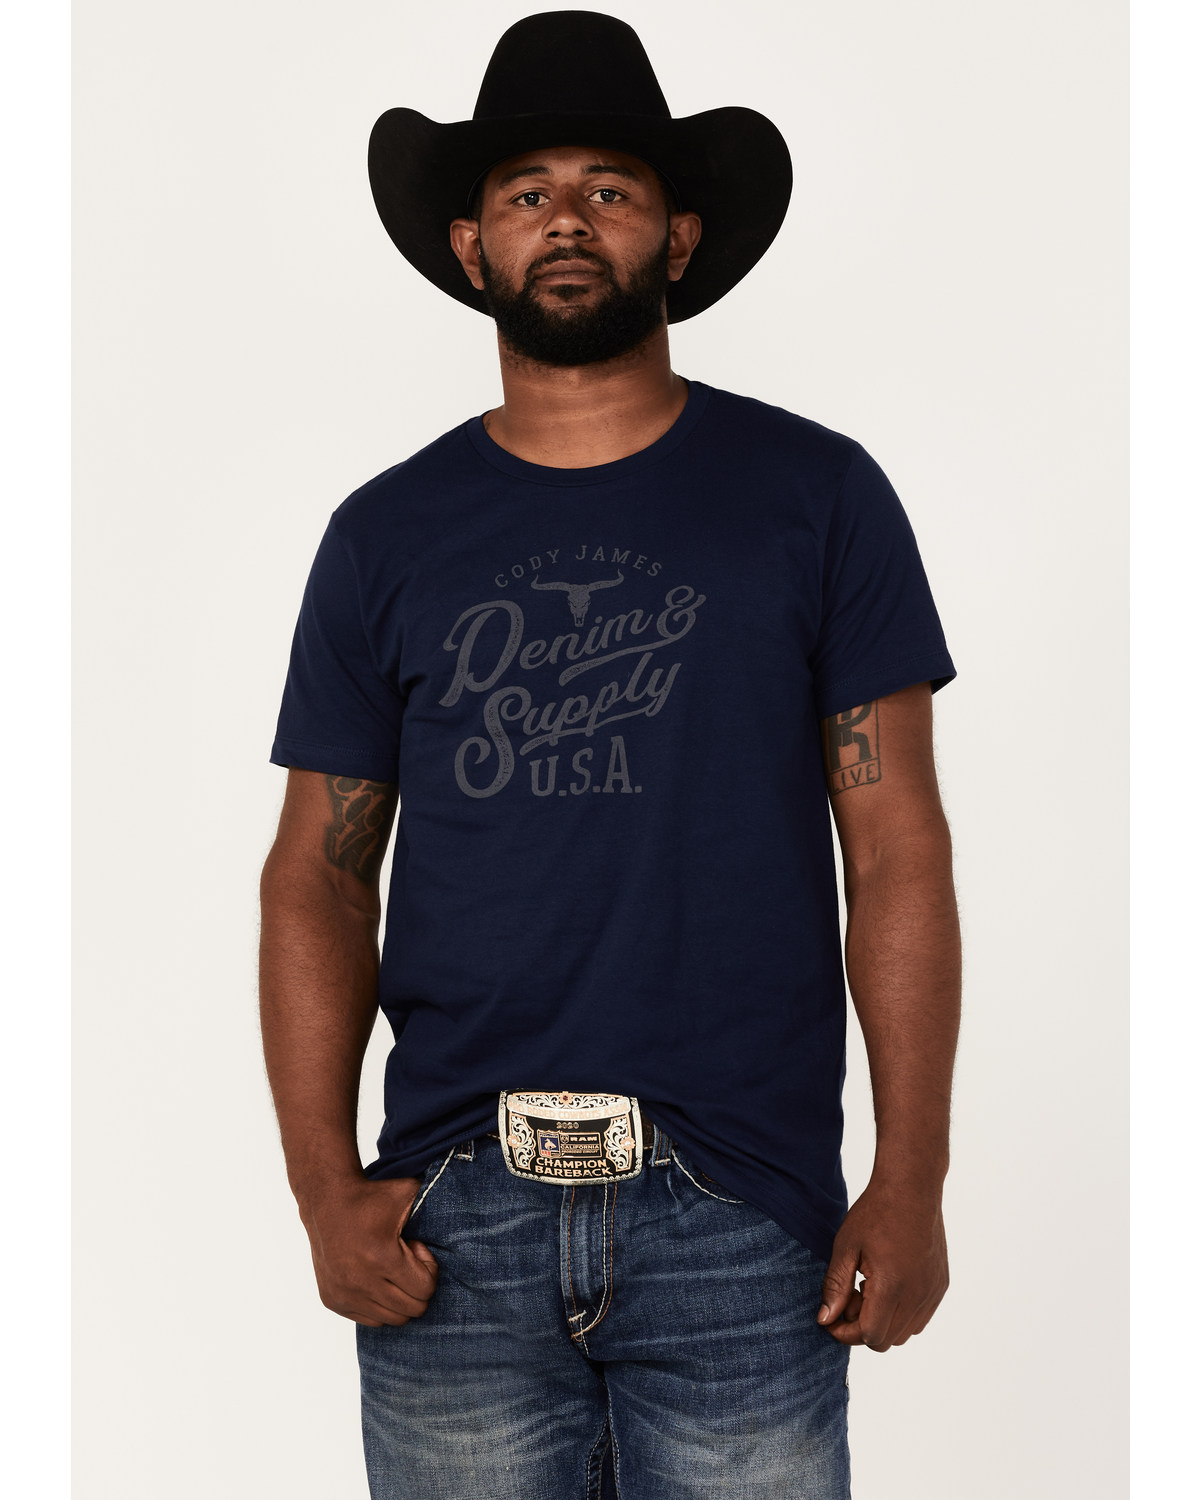 Cody James Men's Denim Supply USA Logo Graphic T-Shirt